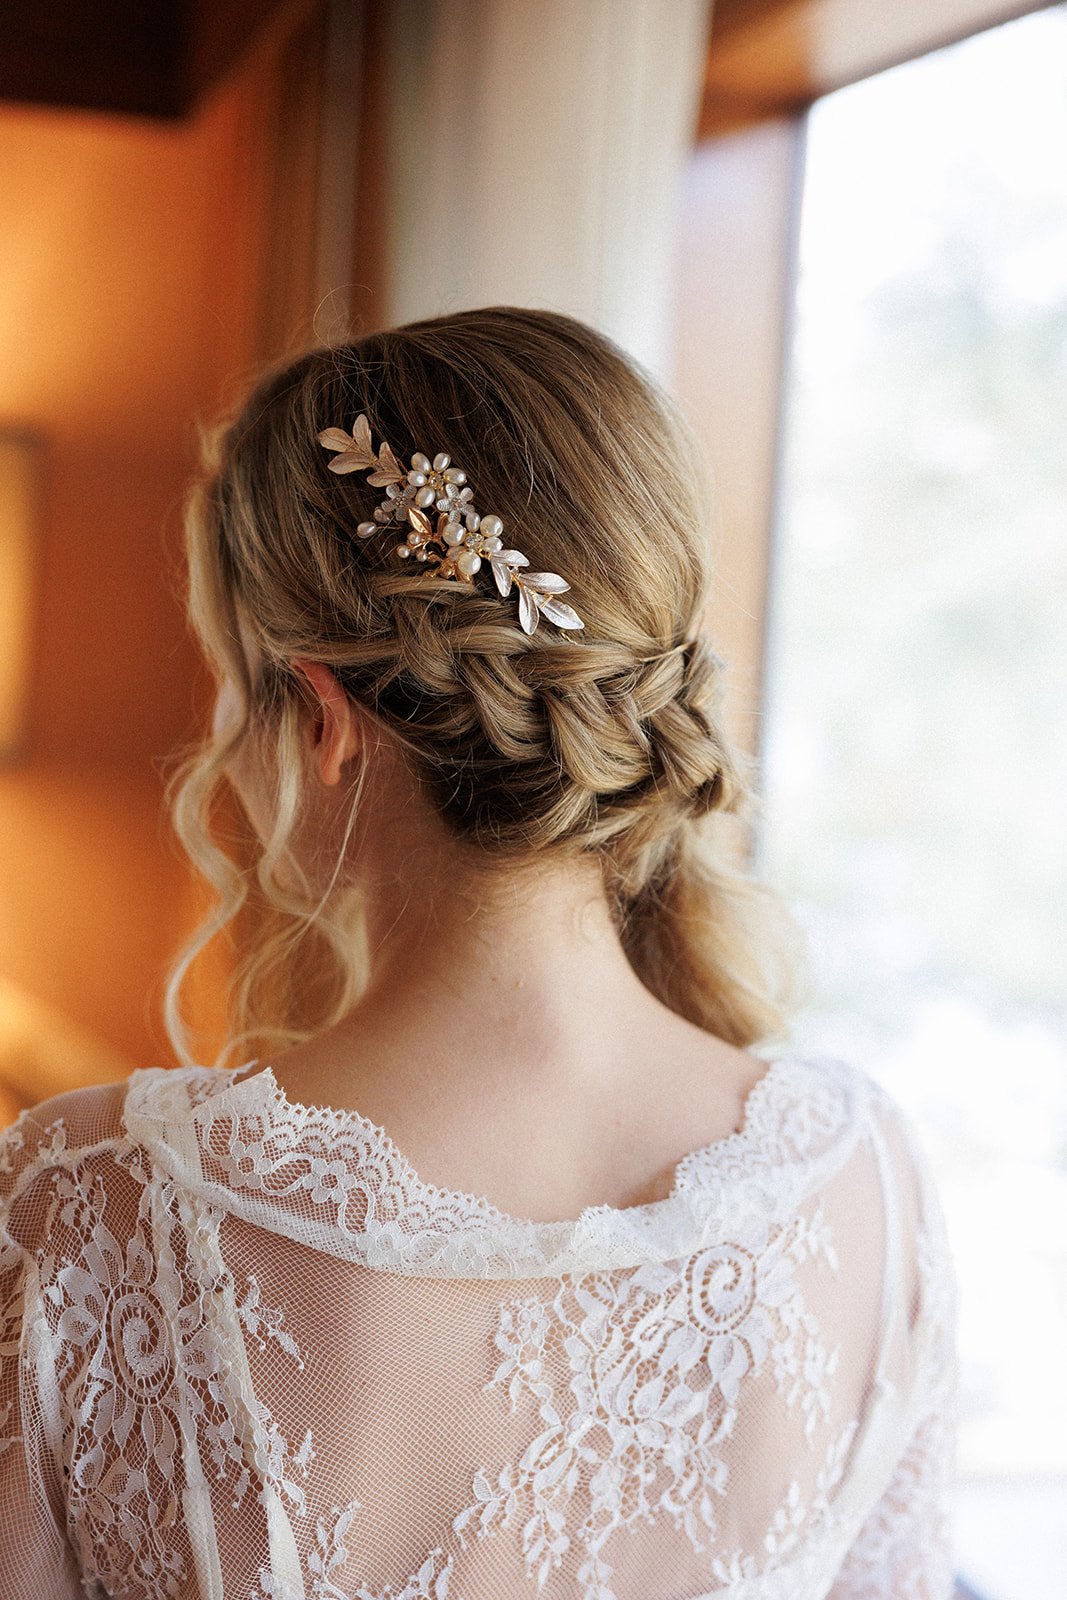  boho braided side hairstyle for brides Lake arrowhead wedding